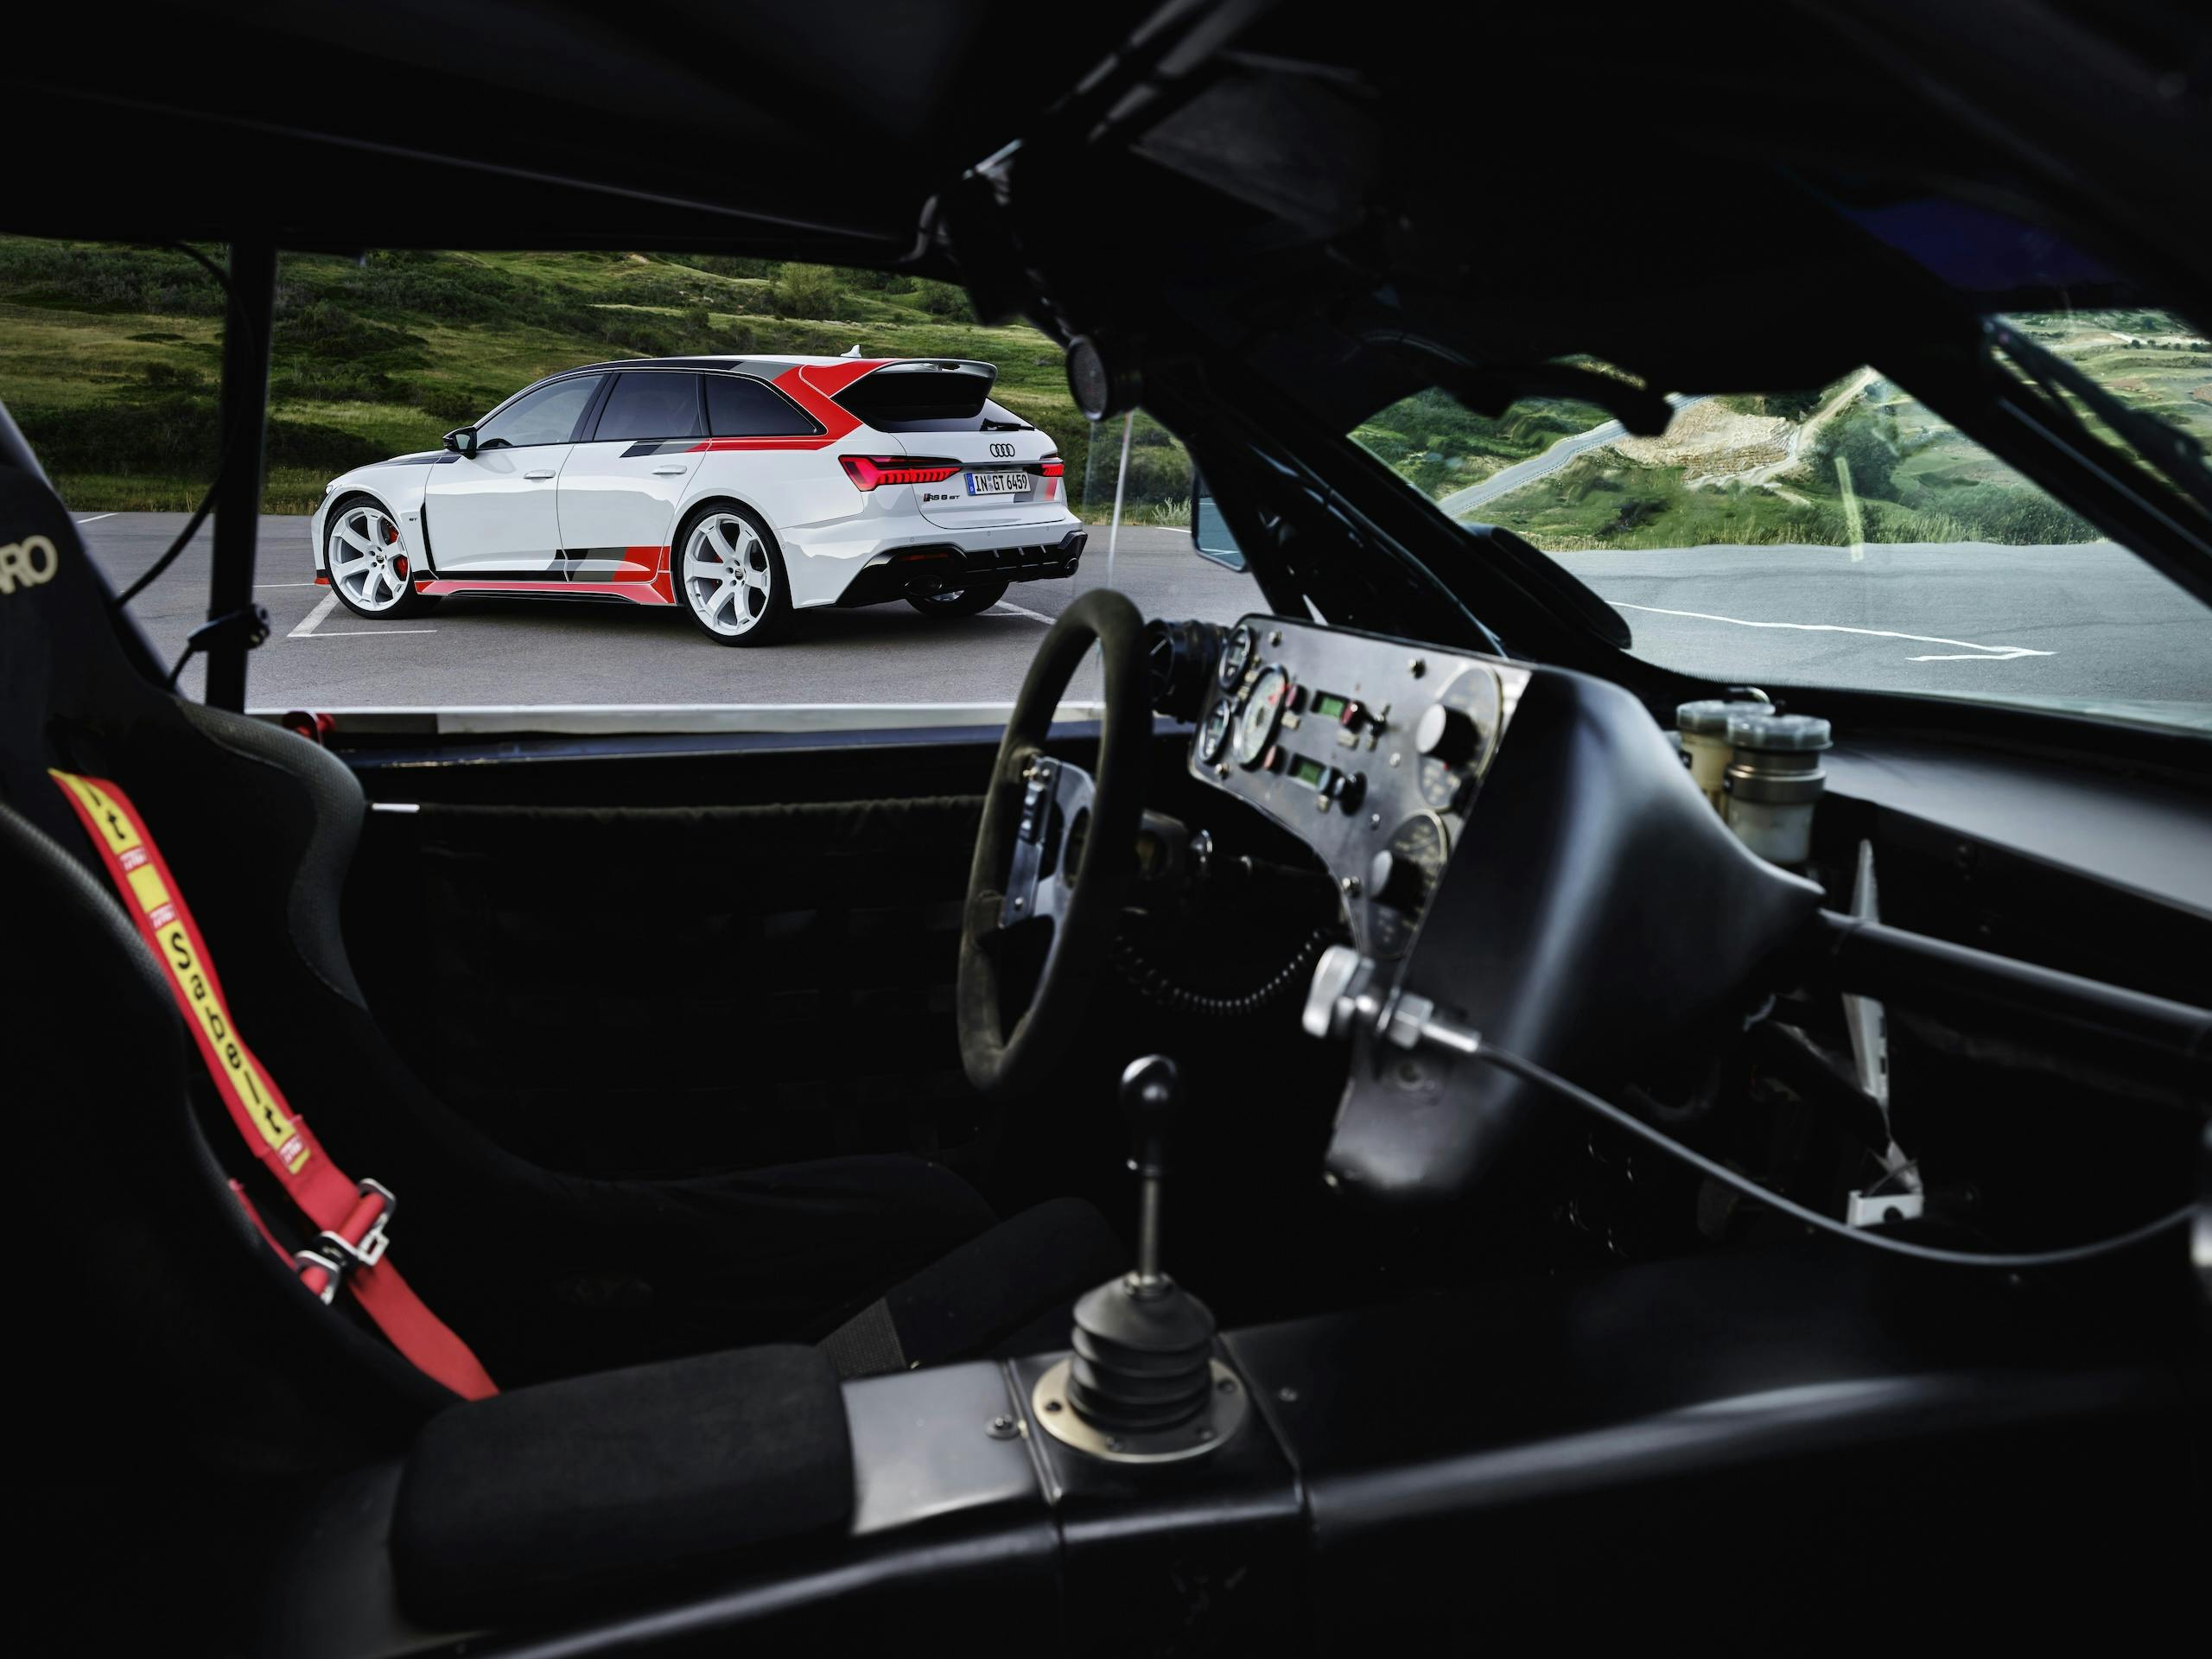 Audi RS 6 Avant GT rear three quarter from RS 6 GTO concept car interior